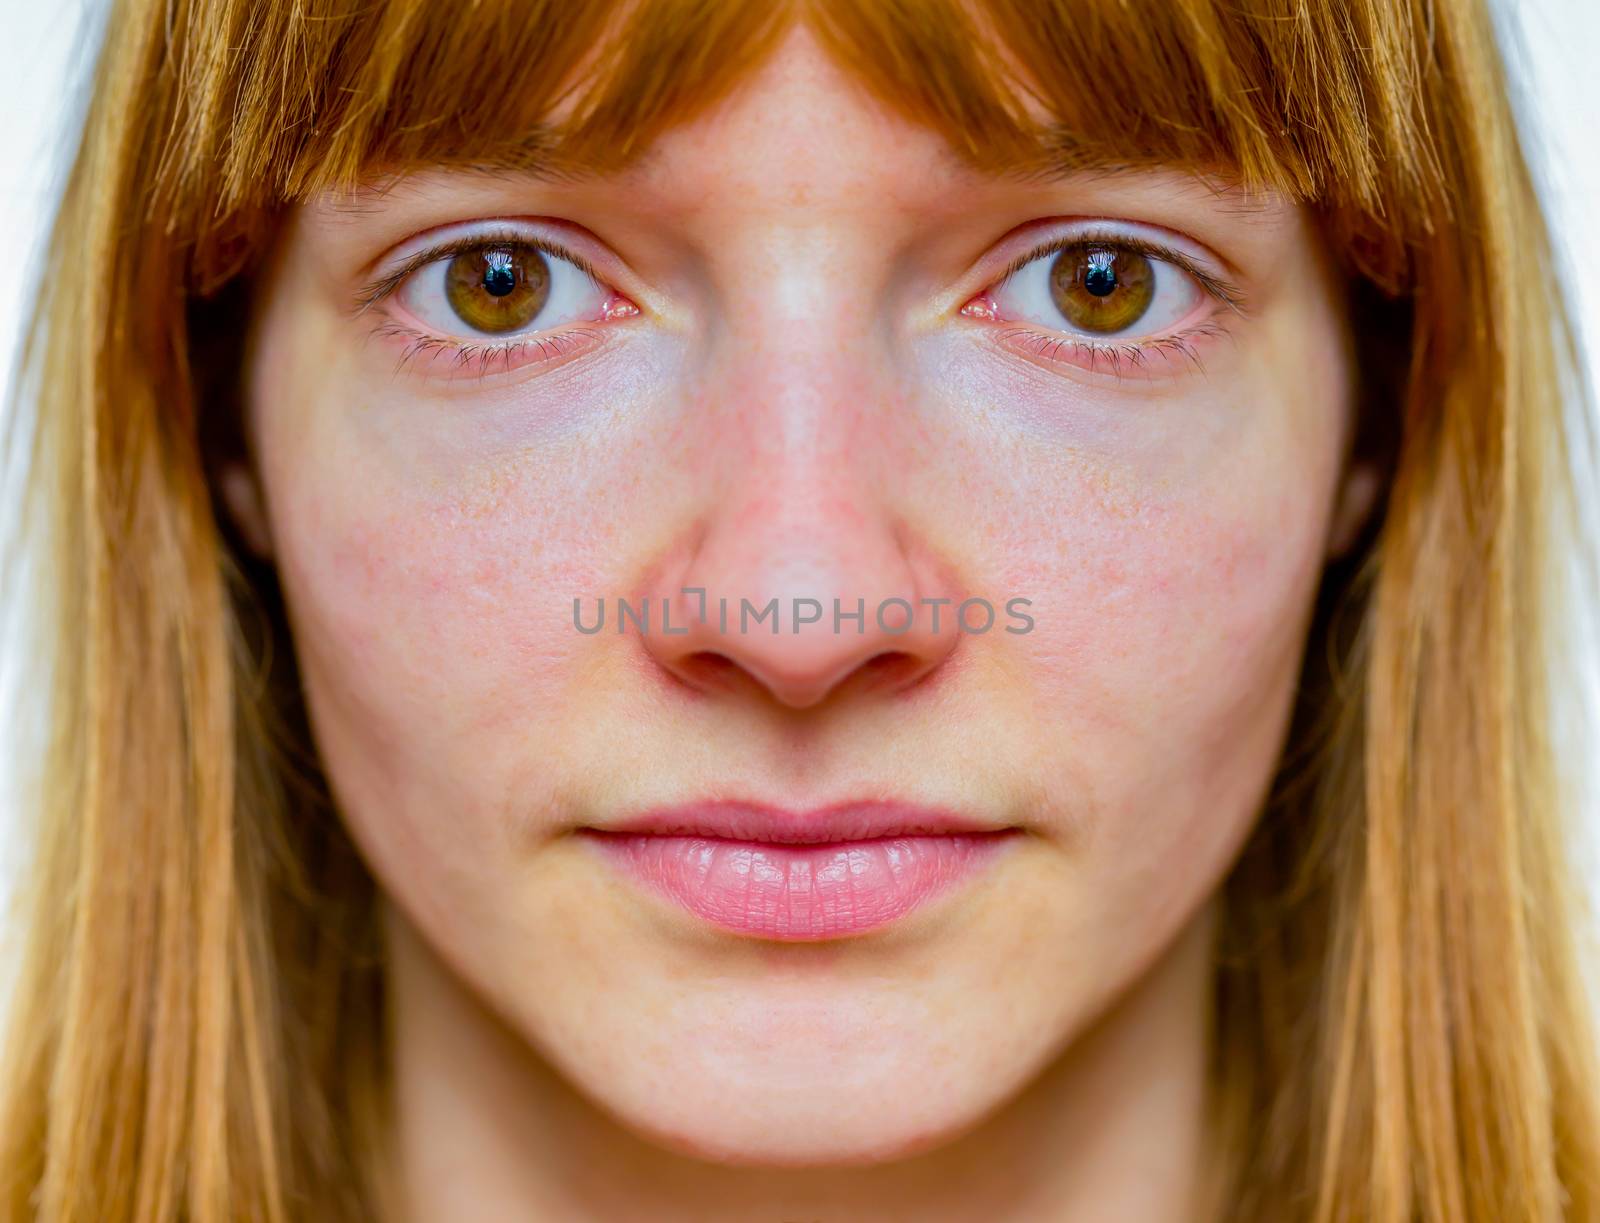 Symmetric face of caucasian teenage girl